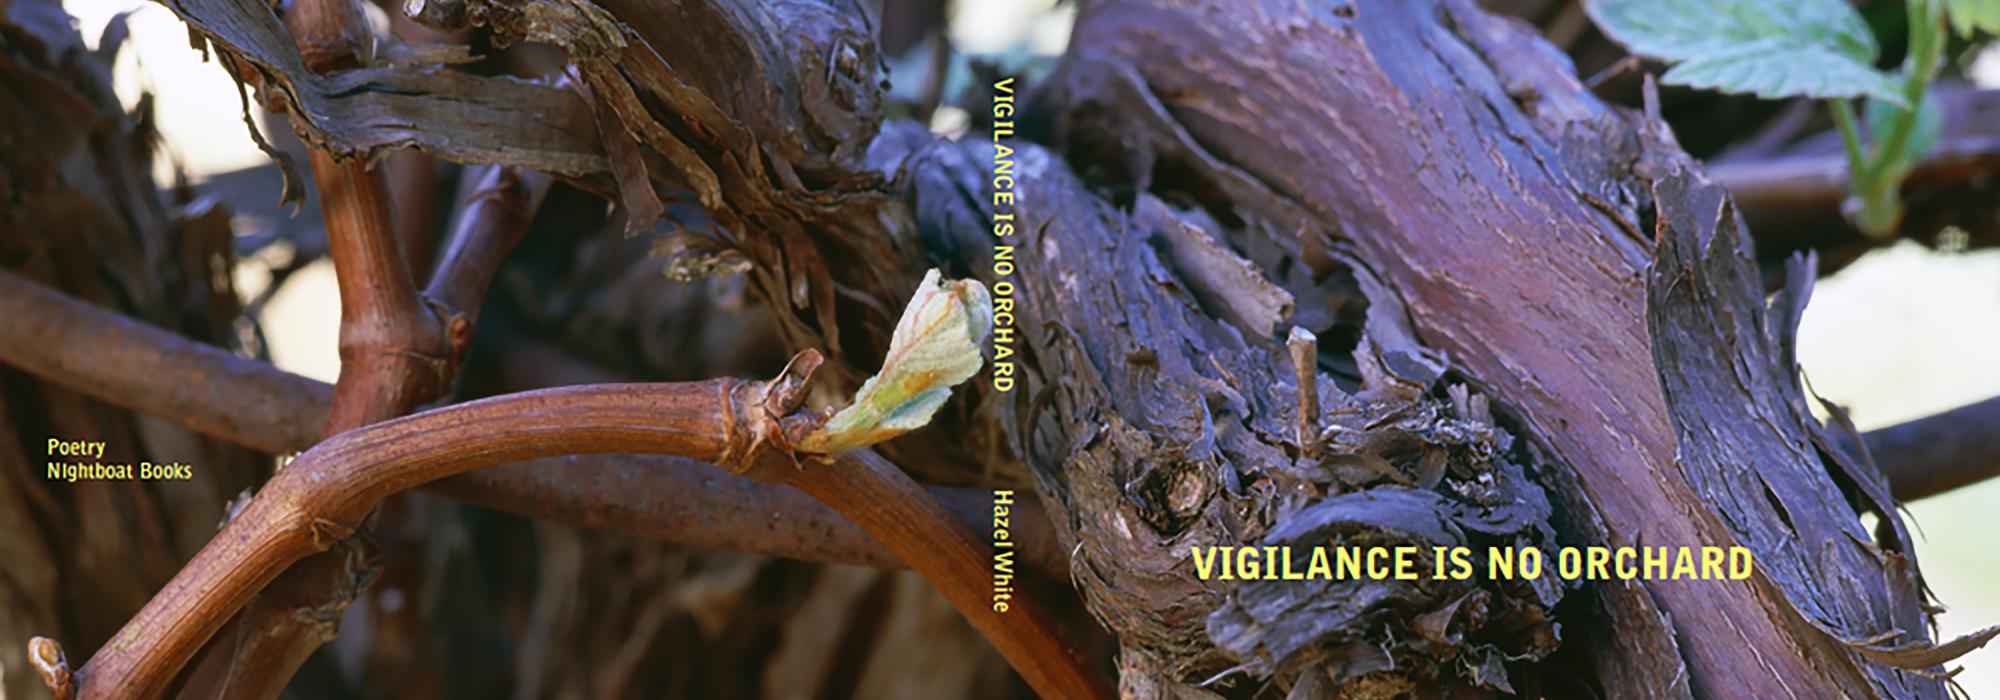 Vigilance Is No Orchard, Santa Barbara, CA